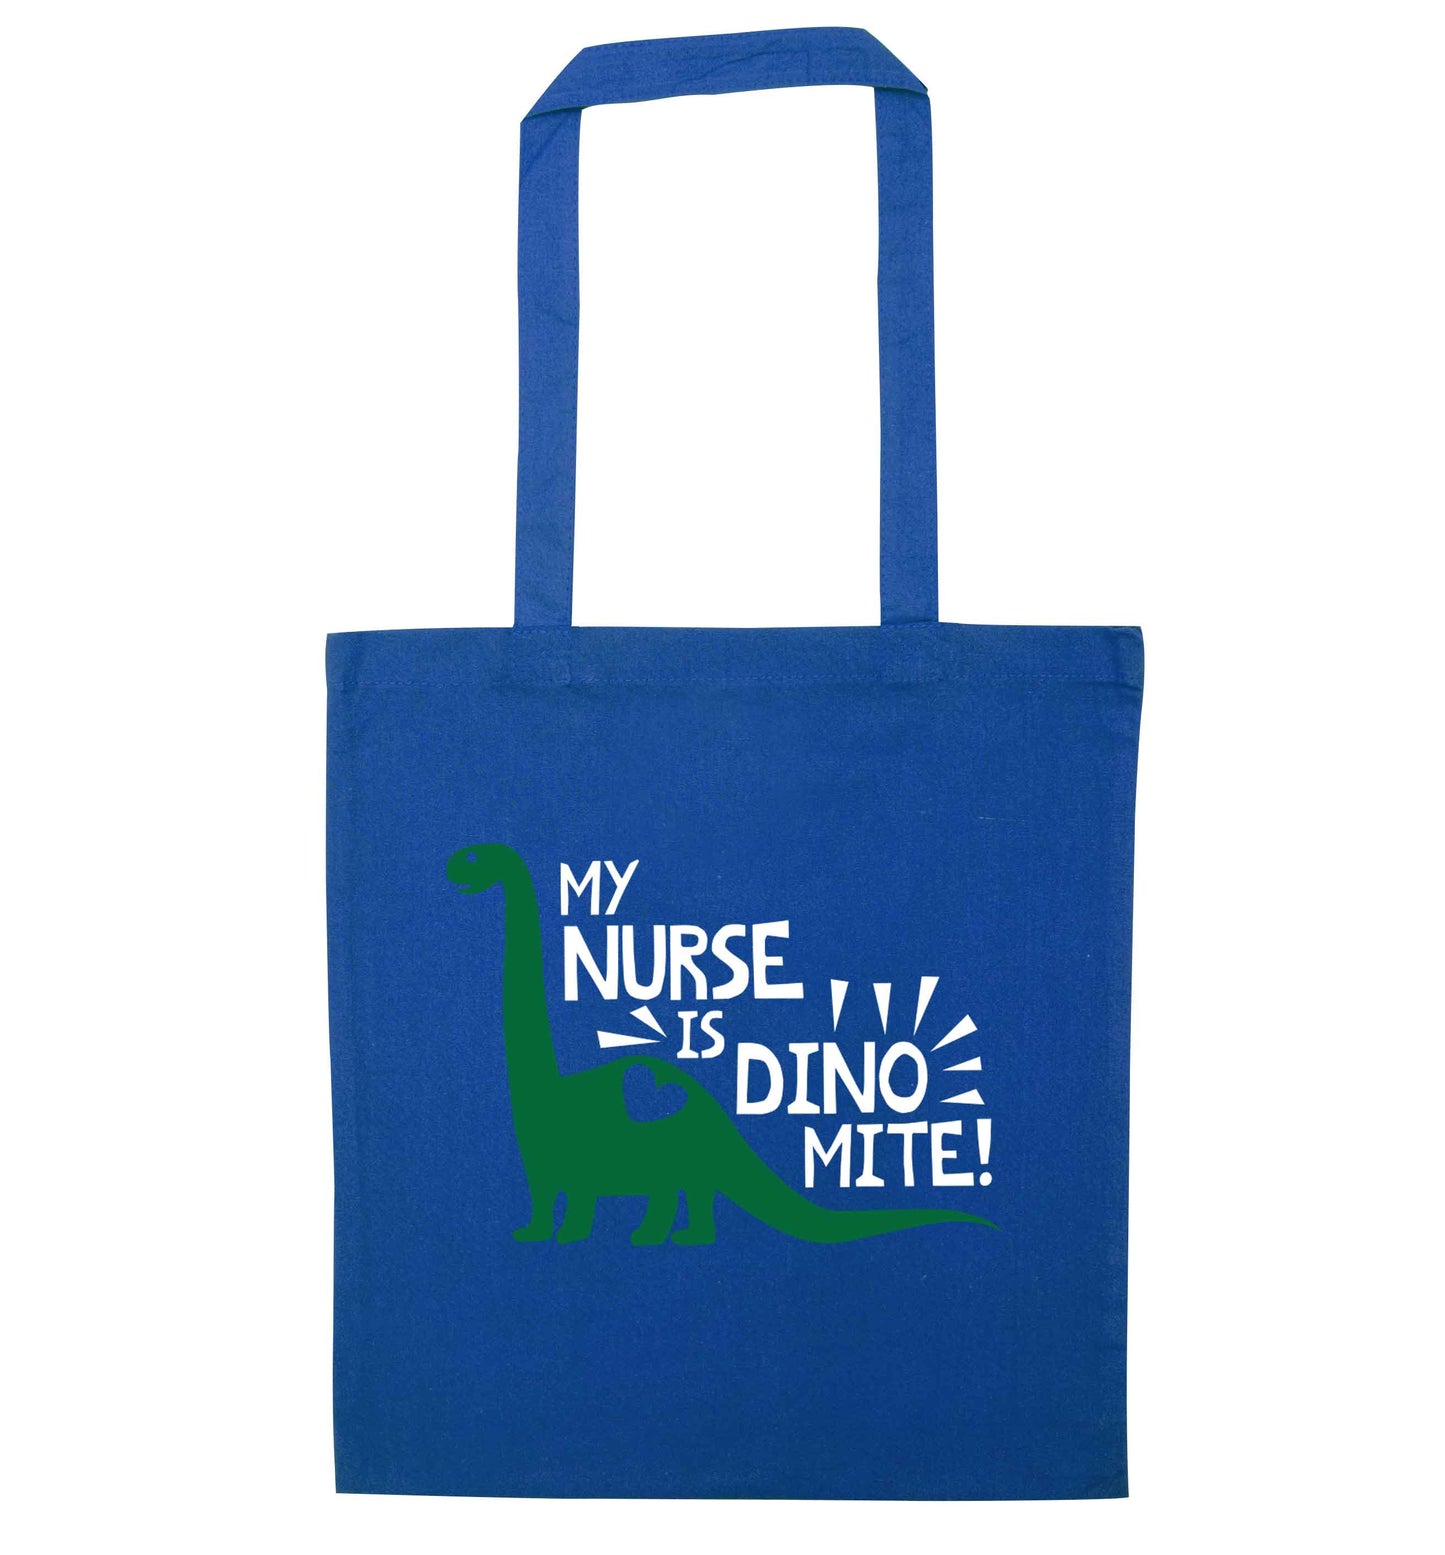 My nurse is dinomite! blue tote bag